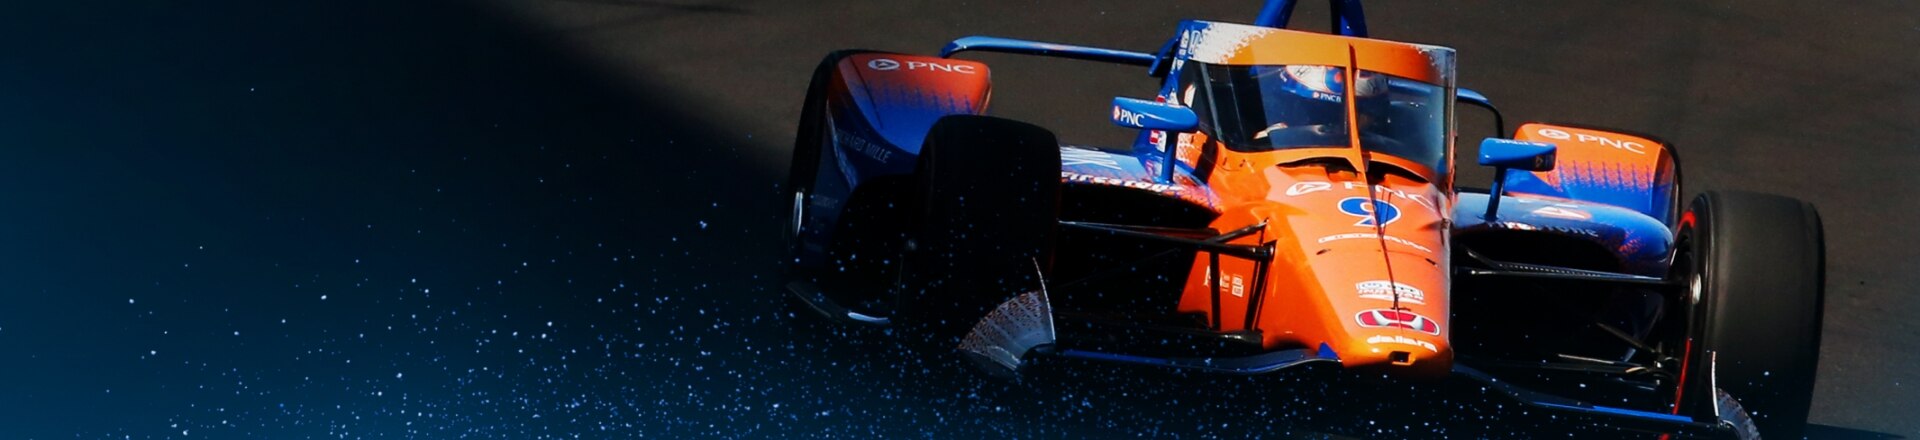 Orange and blue racing car